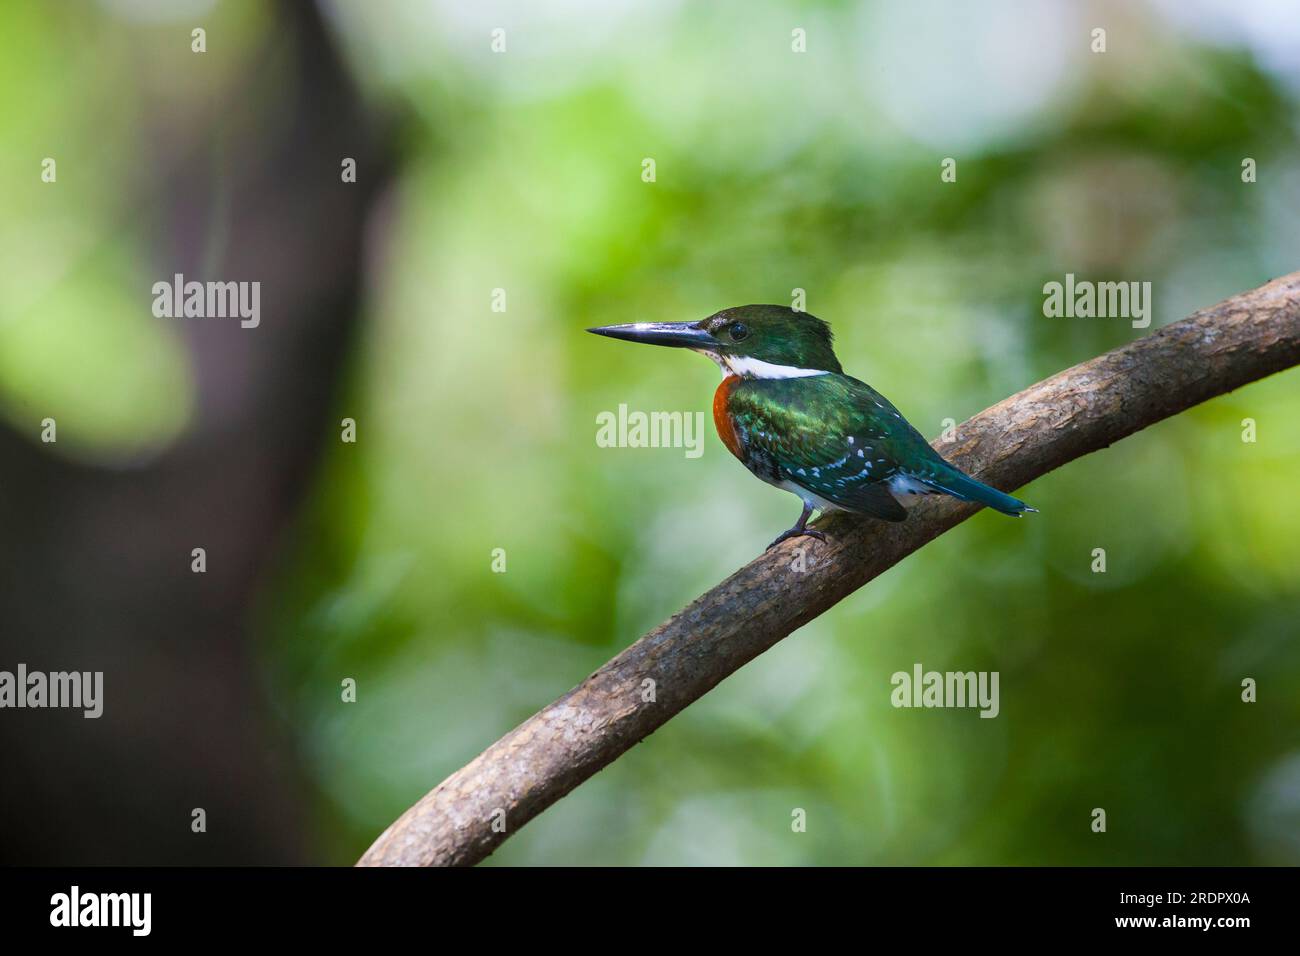 Green Kingfisher, Chloroceryle americana, in einem Mangrovenwald auf Coiba Island, Pazifikküste, Provinz Veraguas, Republik Panama, Mittelamerika. Stockfoto